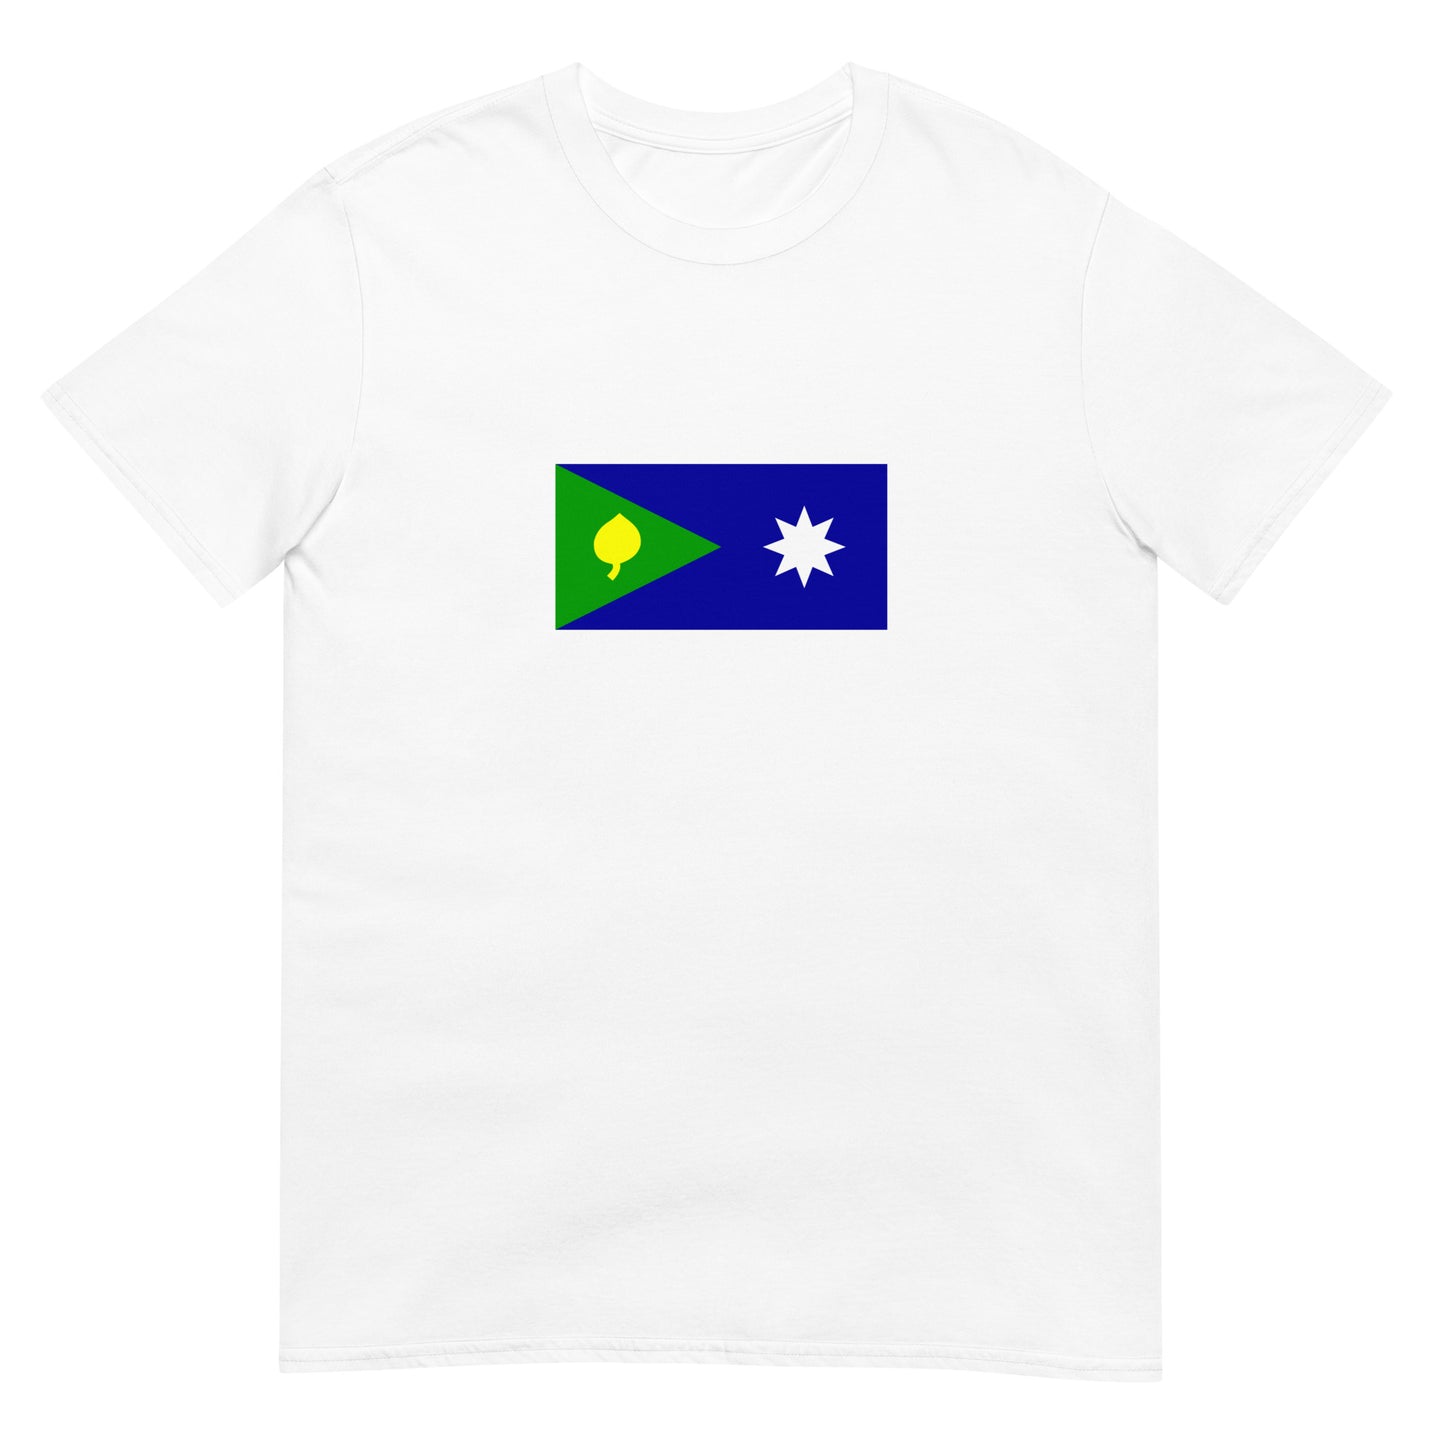 Australia - Saibai Island people | Native Australian Flag Interactive T-shirt